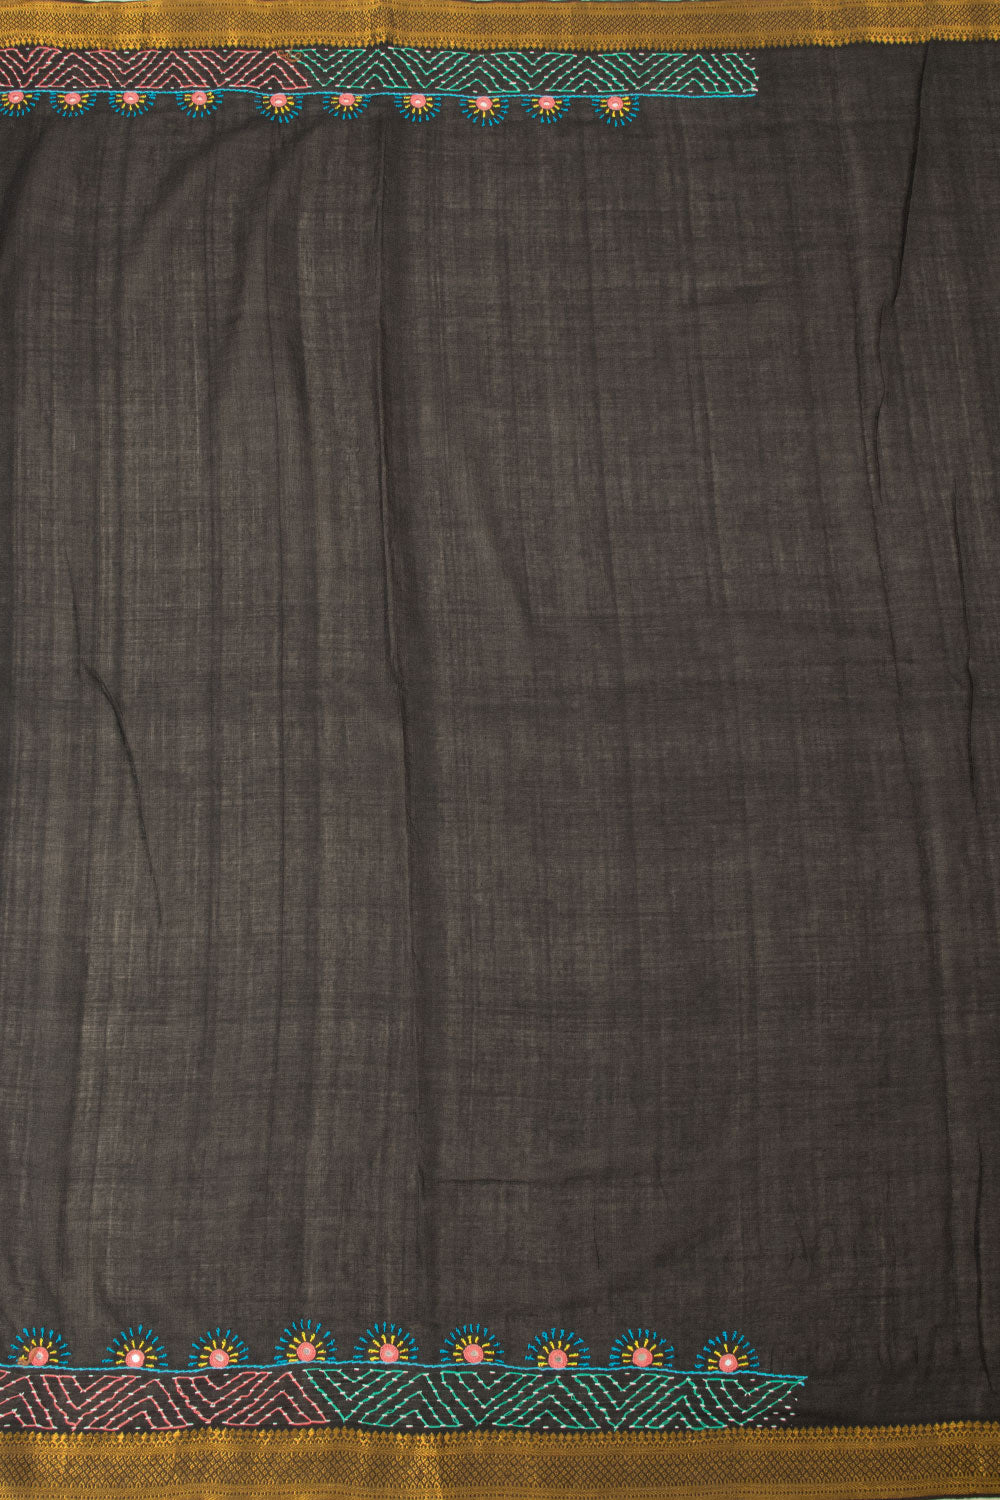 Black Handloom Kutchi Embroidered Cotton Saree 10064703